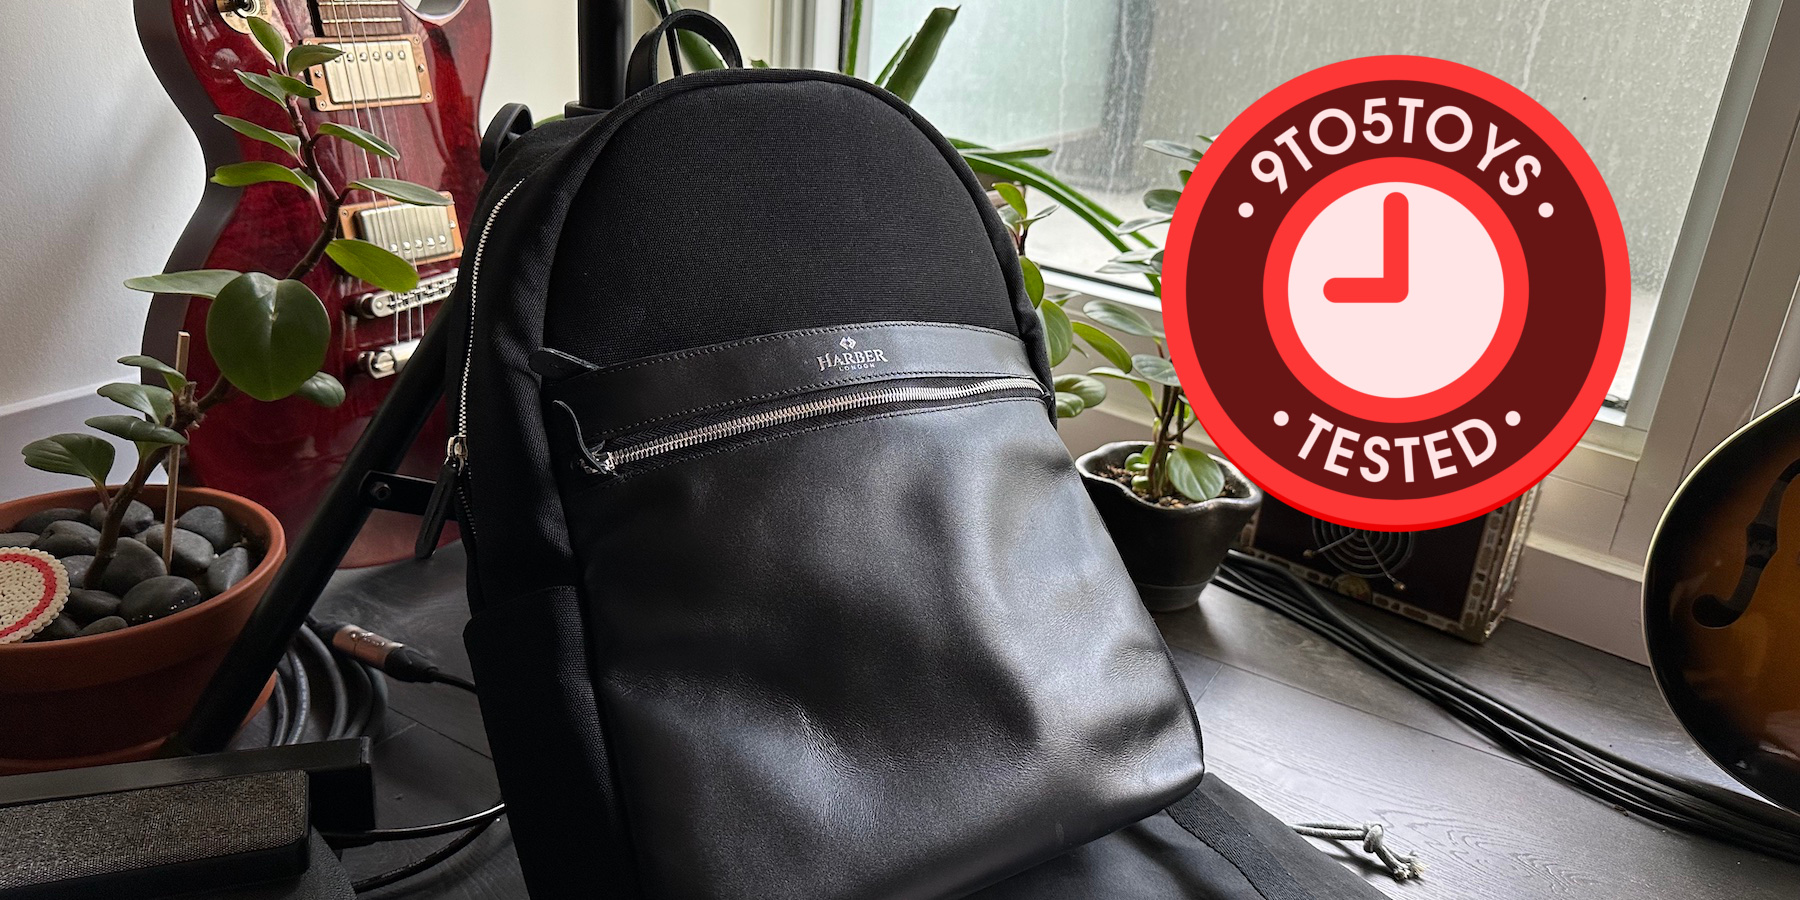  Londo Top Grain Leather Macbook Bag Laptop Sleeve for